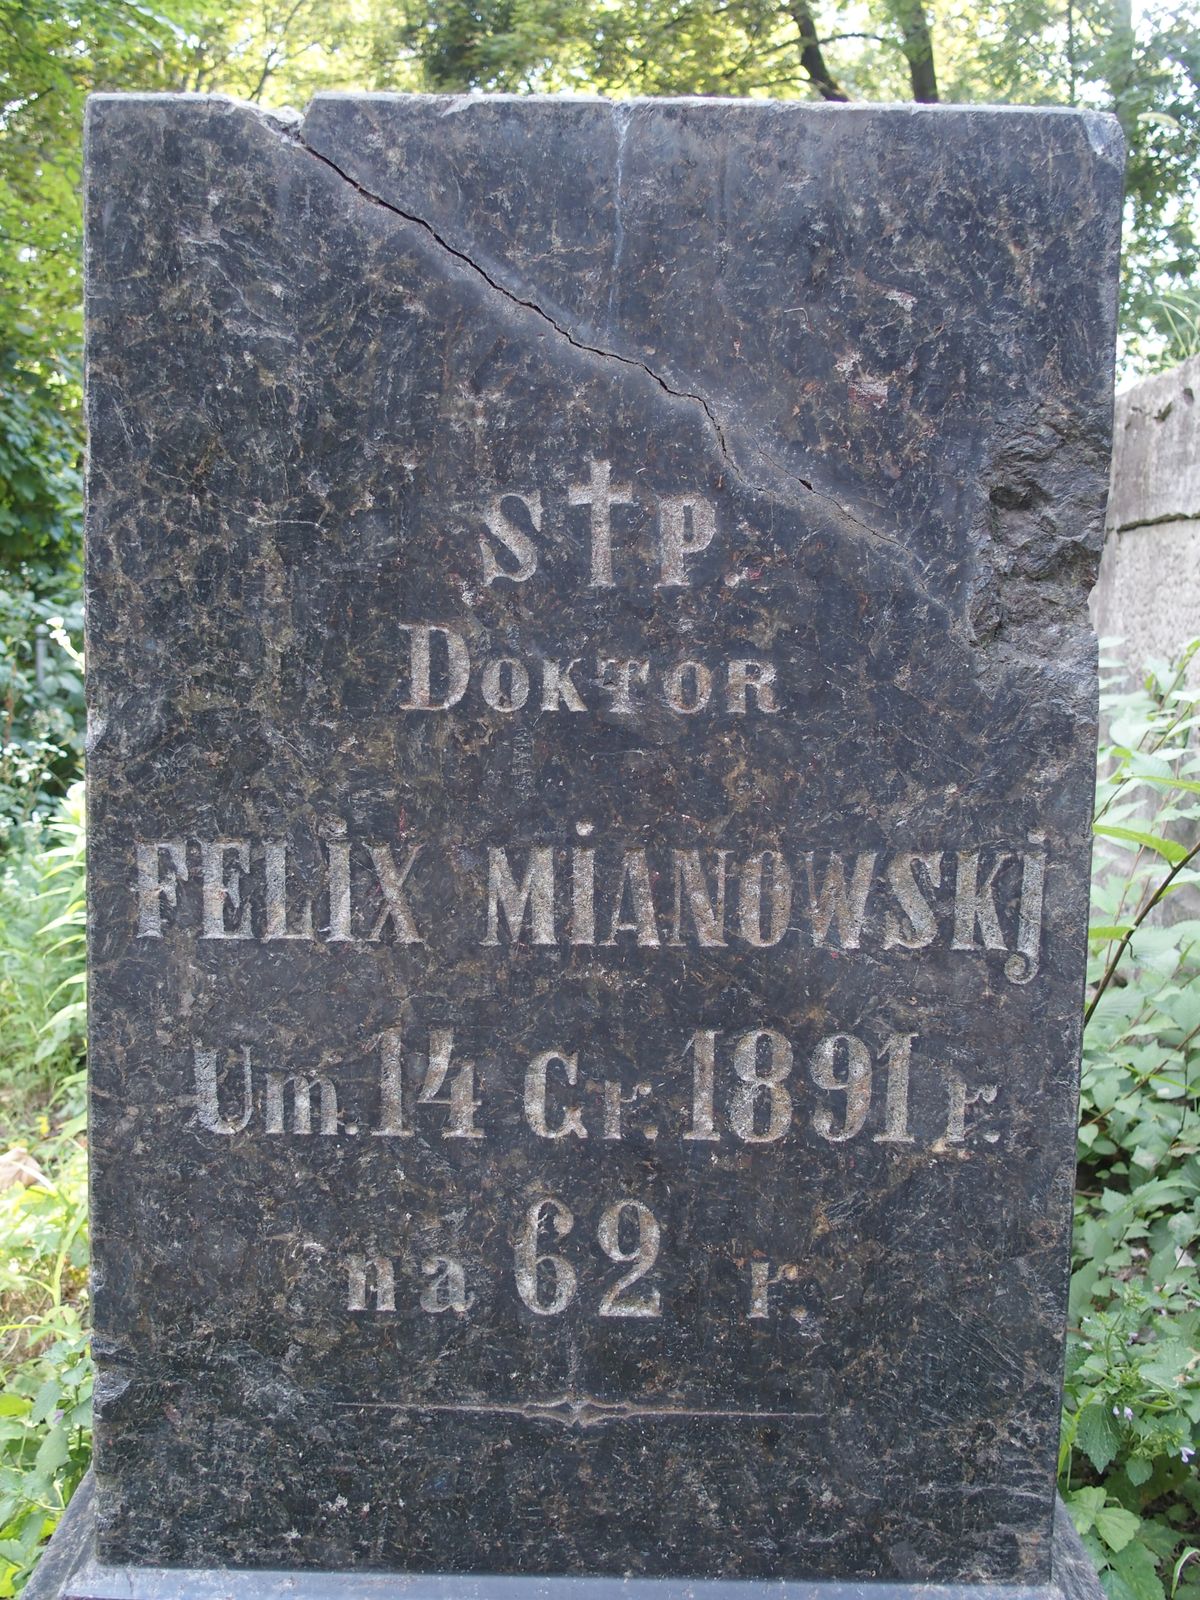 Inscription from the gravestone of Felix Mianowski, Baykova cemetery in Kiev, as of 2021